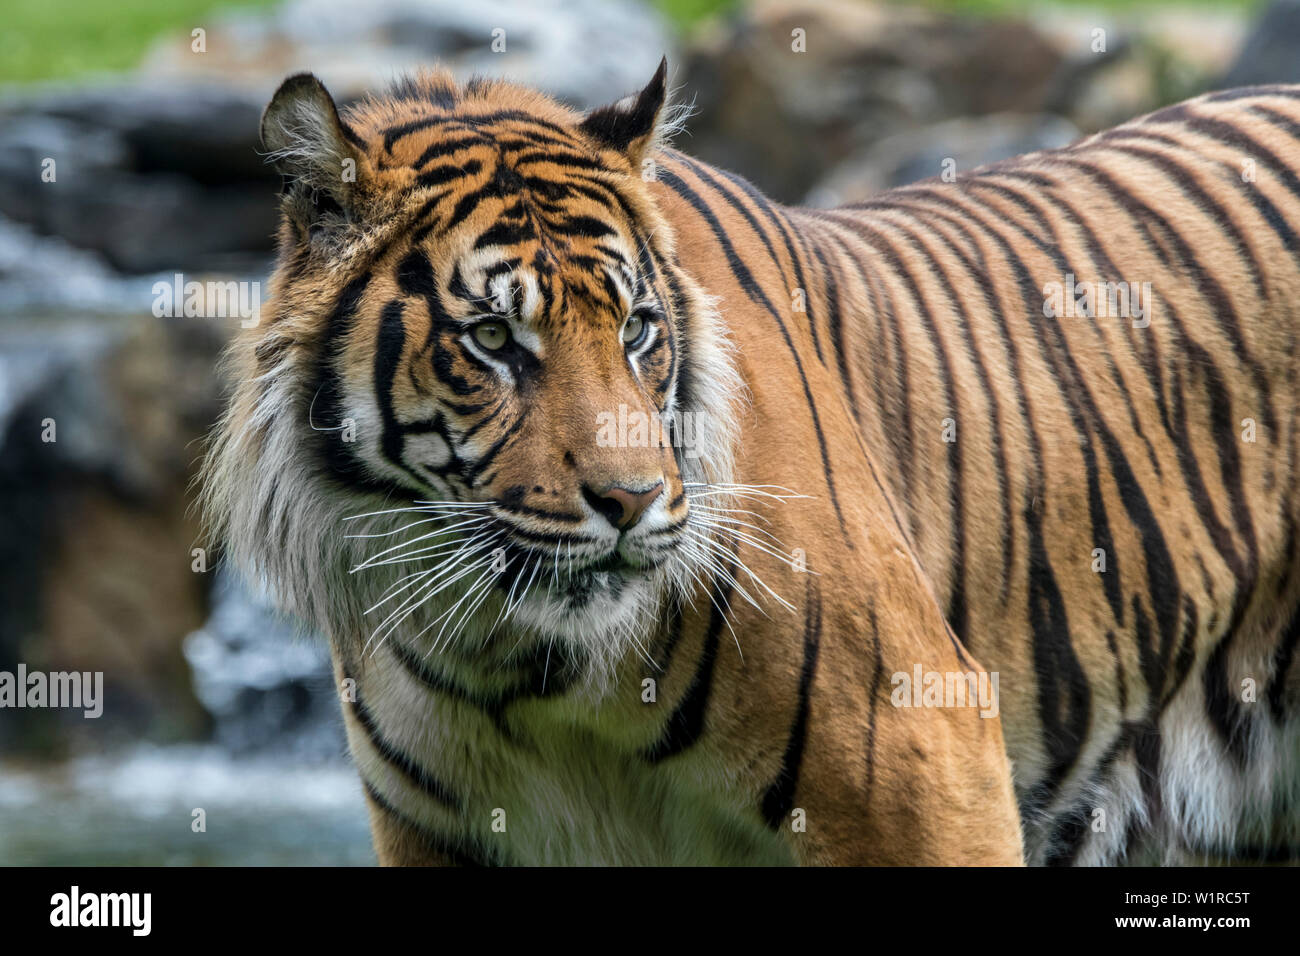 Sumatran tiger (Panthera tigris sondaica) standing in stream, native to the Indonesian island of Sumatra, Indonesia Stock Photo